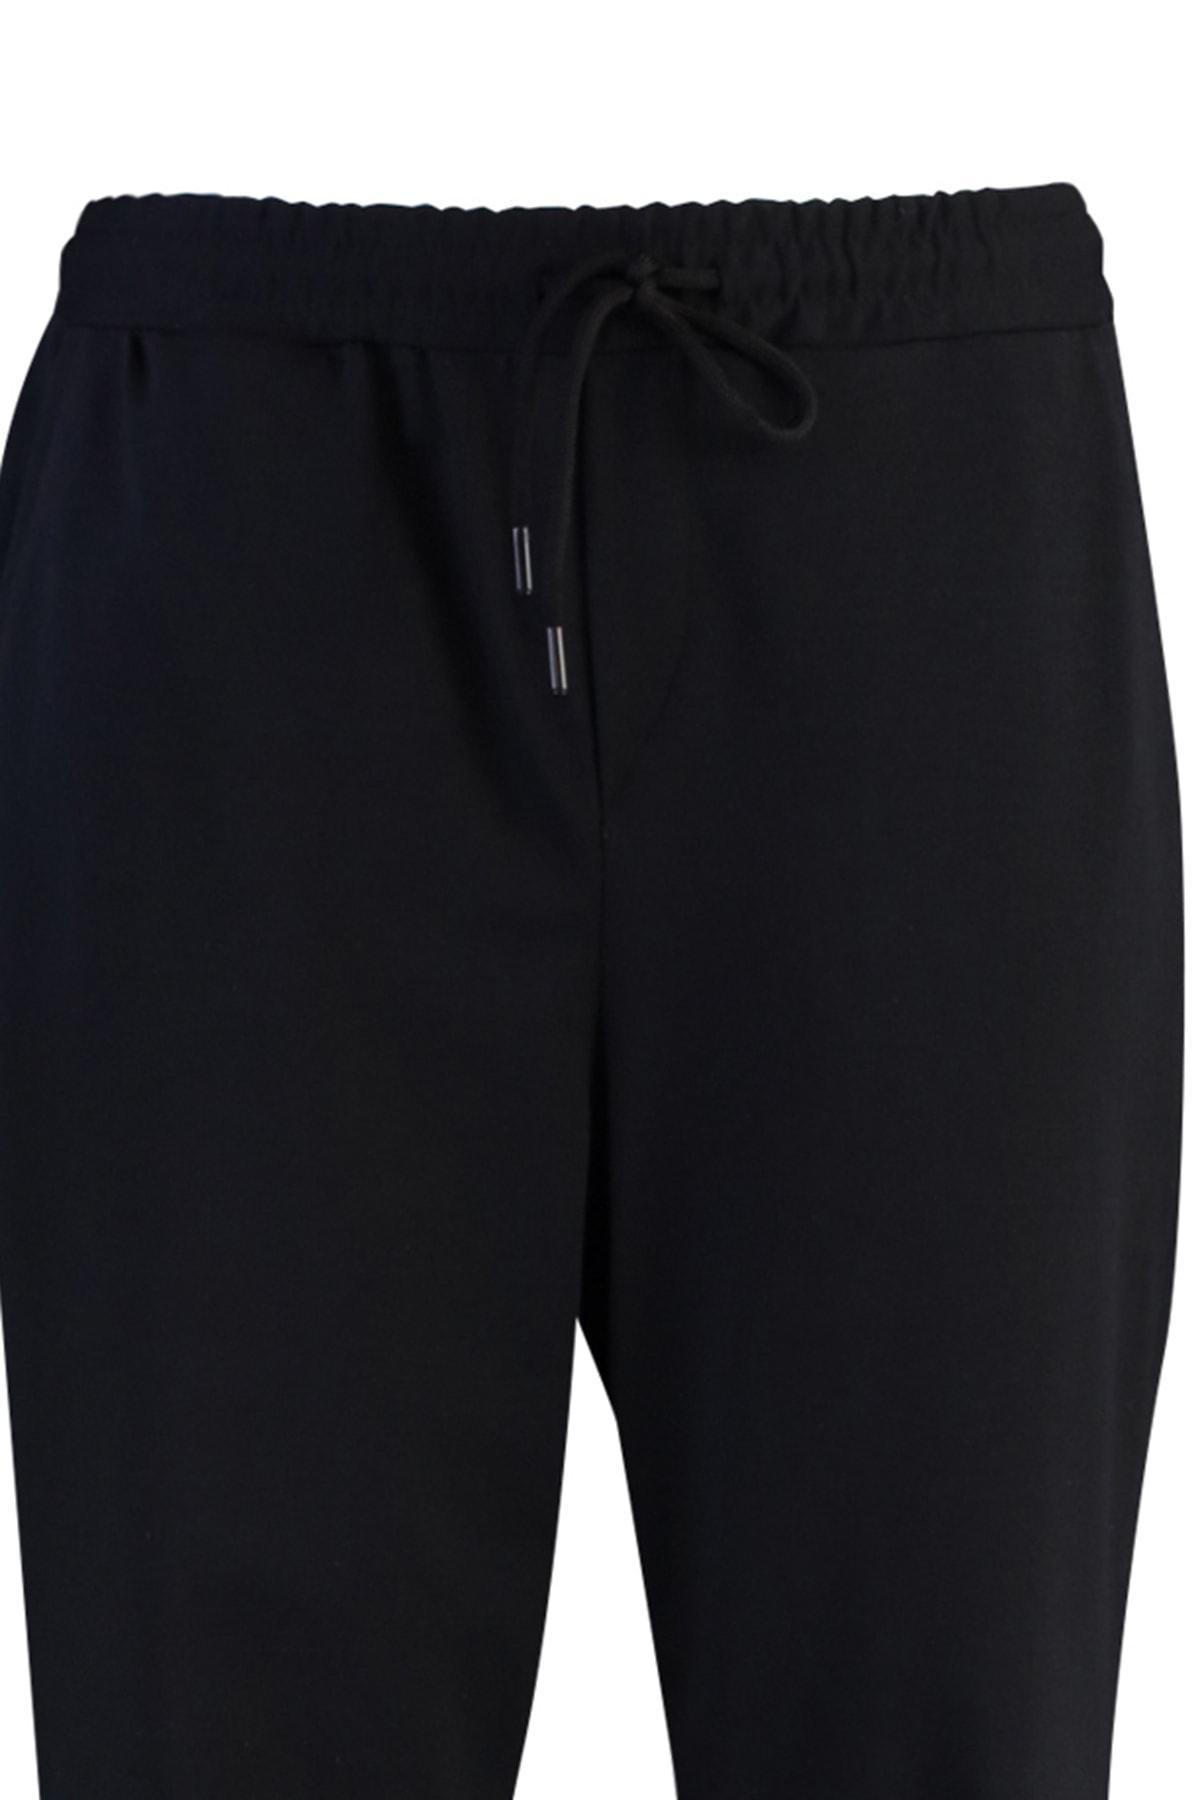 Trendyol - Black Joggers Mid Waist Sweatpants